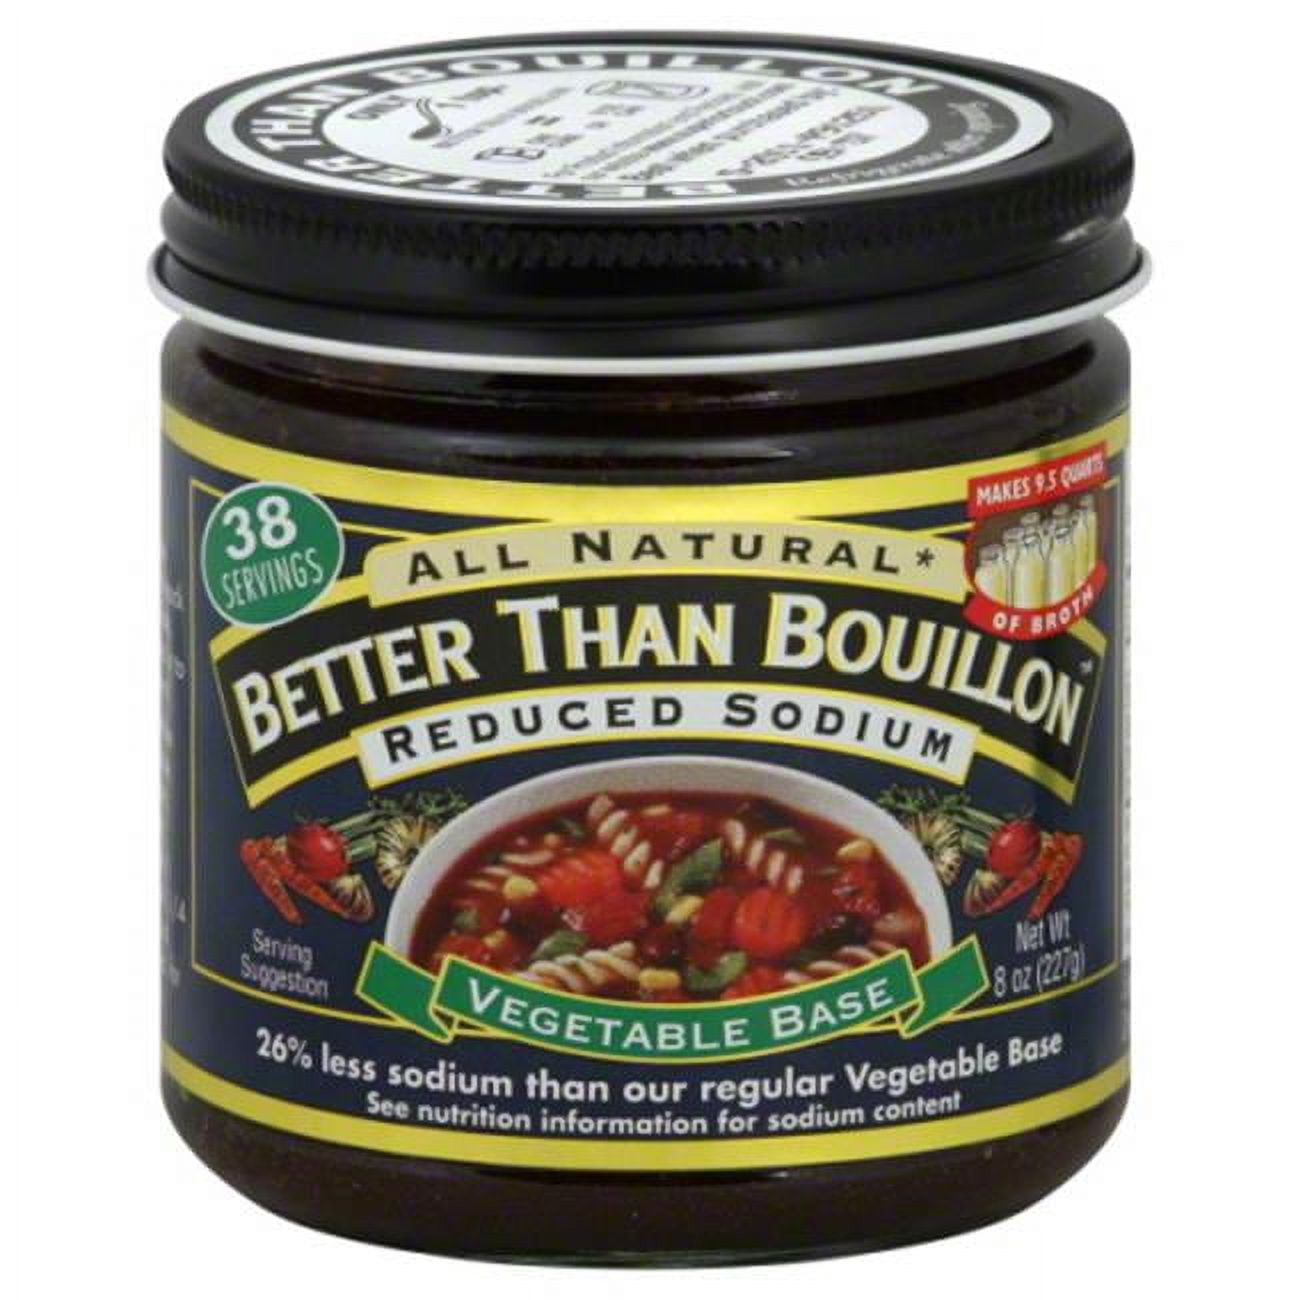 Better Than Bouillon Base Vegetable Reduced Sodium 8 oz Jar